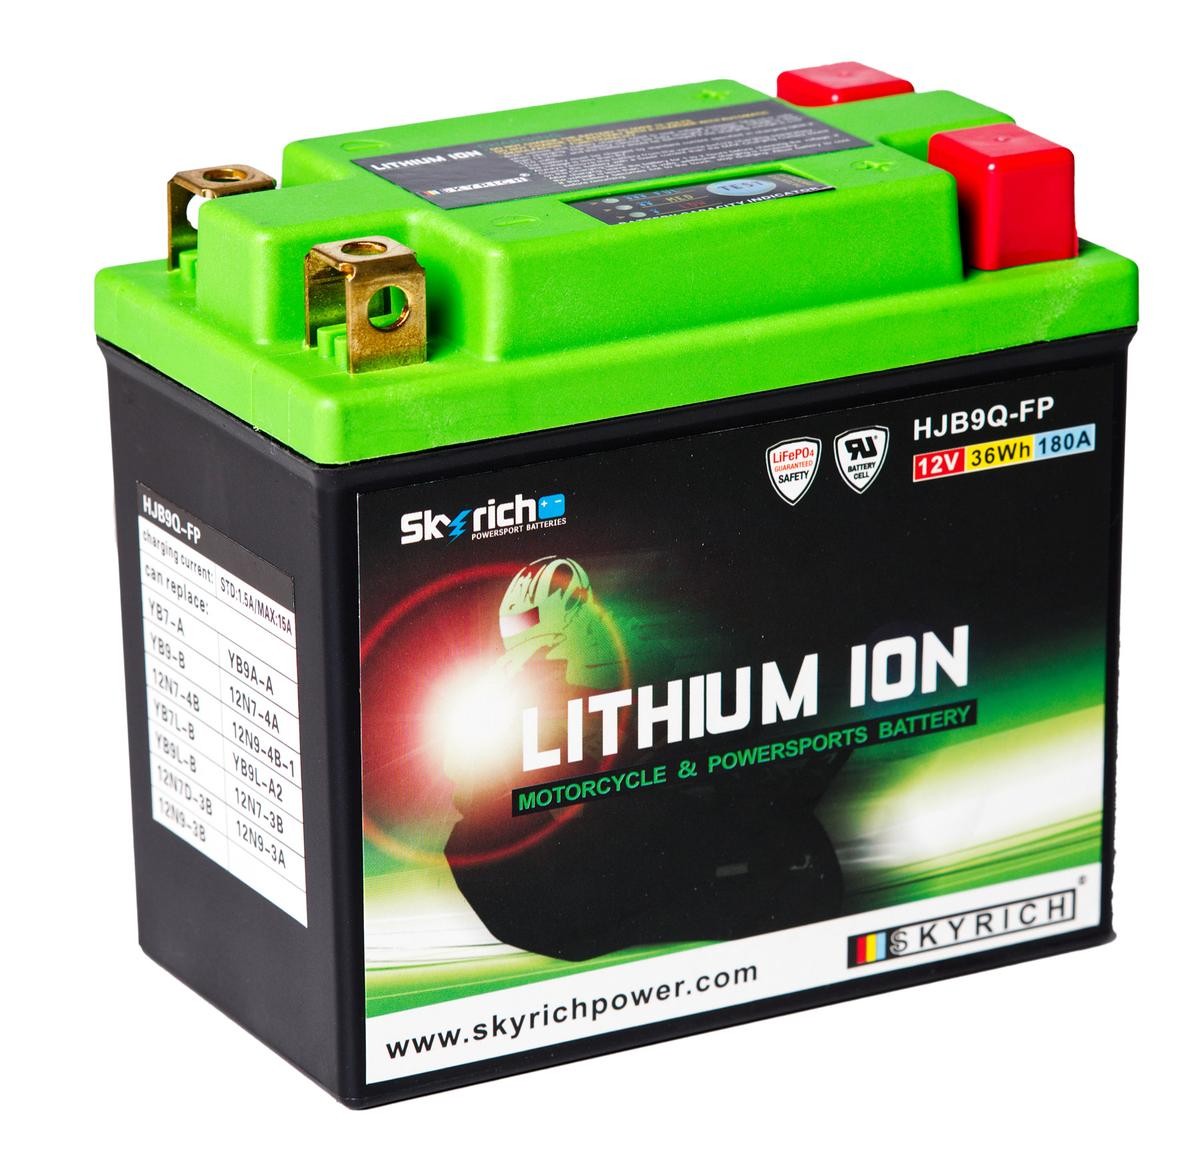 MALAGUTI F Batterie 12V 3Ah 180A N Li-Ionen-Batterie SKYRICH LITHIUM ION HJB9Q-FP